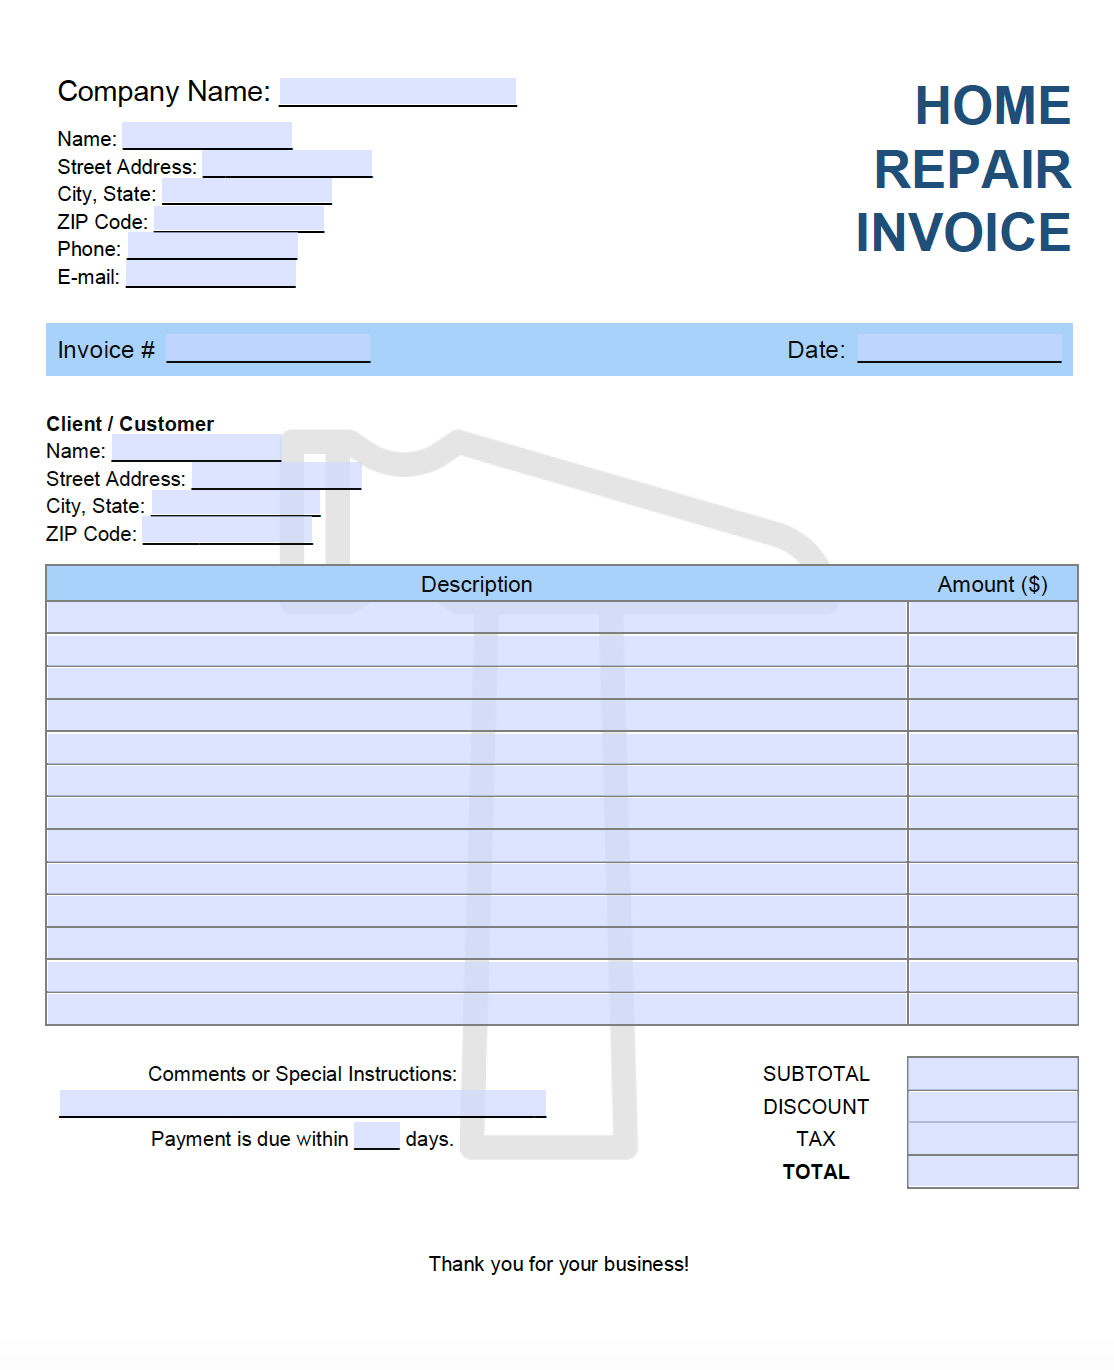 Free Home Repair Invoice Template  PDF  WORD  EXCEL Regarding Maintenance Invoice Template Free